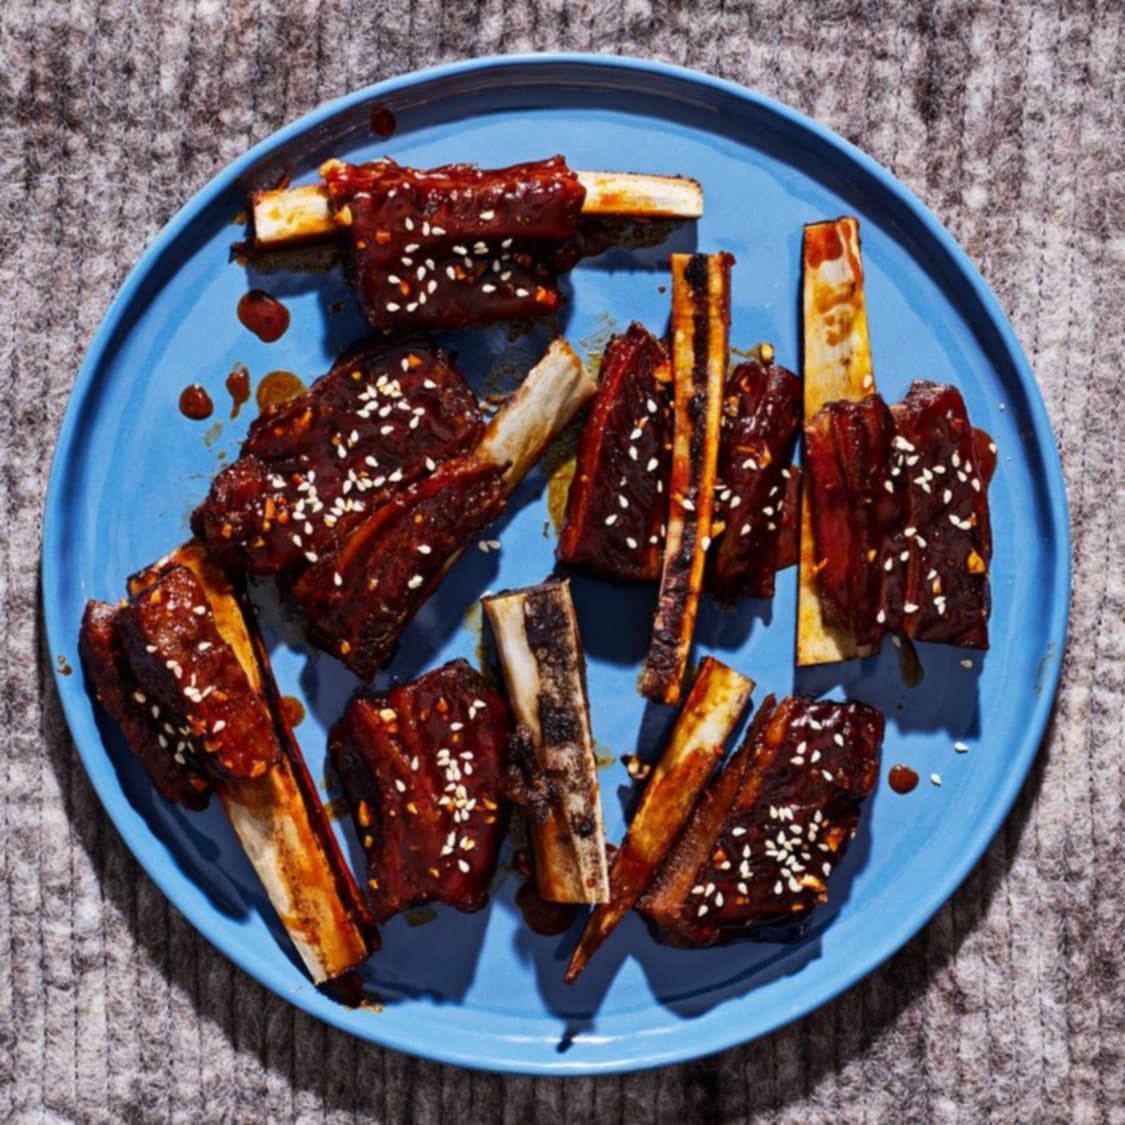 https://fleishigs.com/images/mobile-app/recipes/4011-list-gochujang-glazed-spare-ribs.jpg